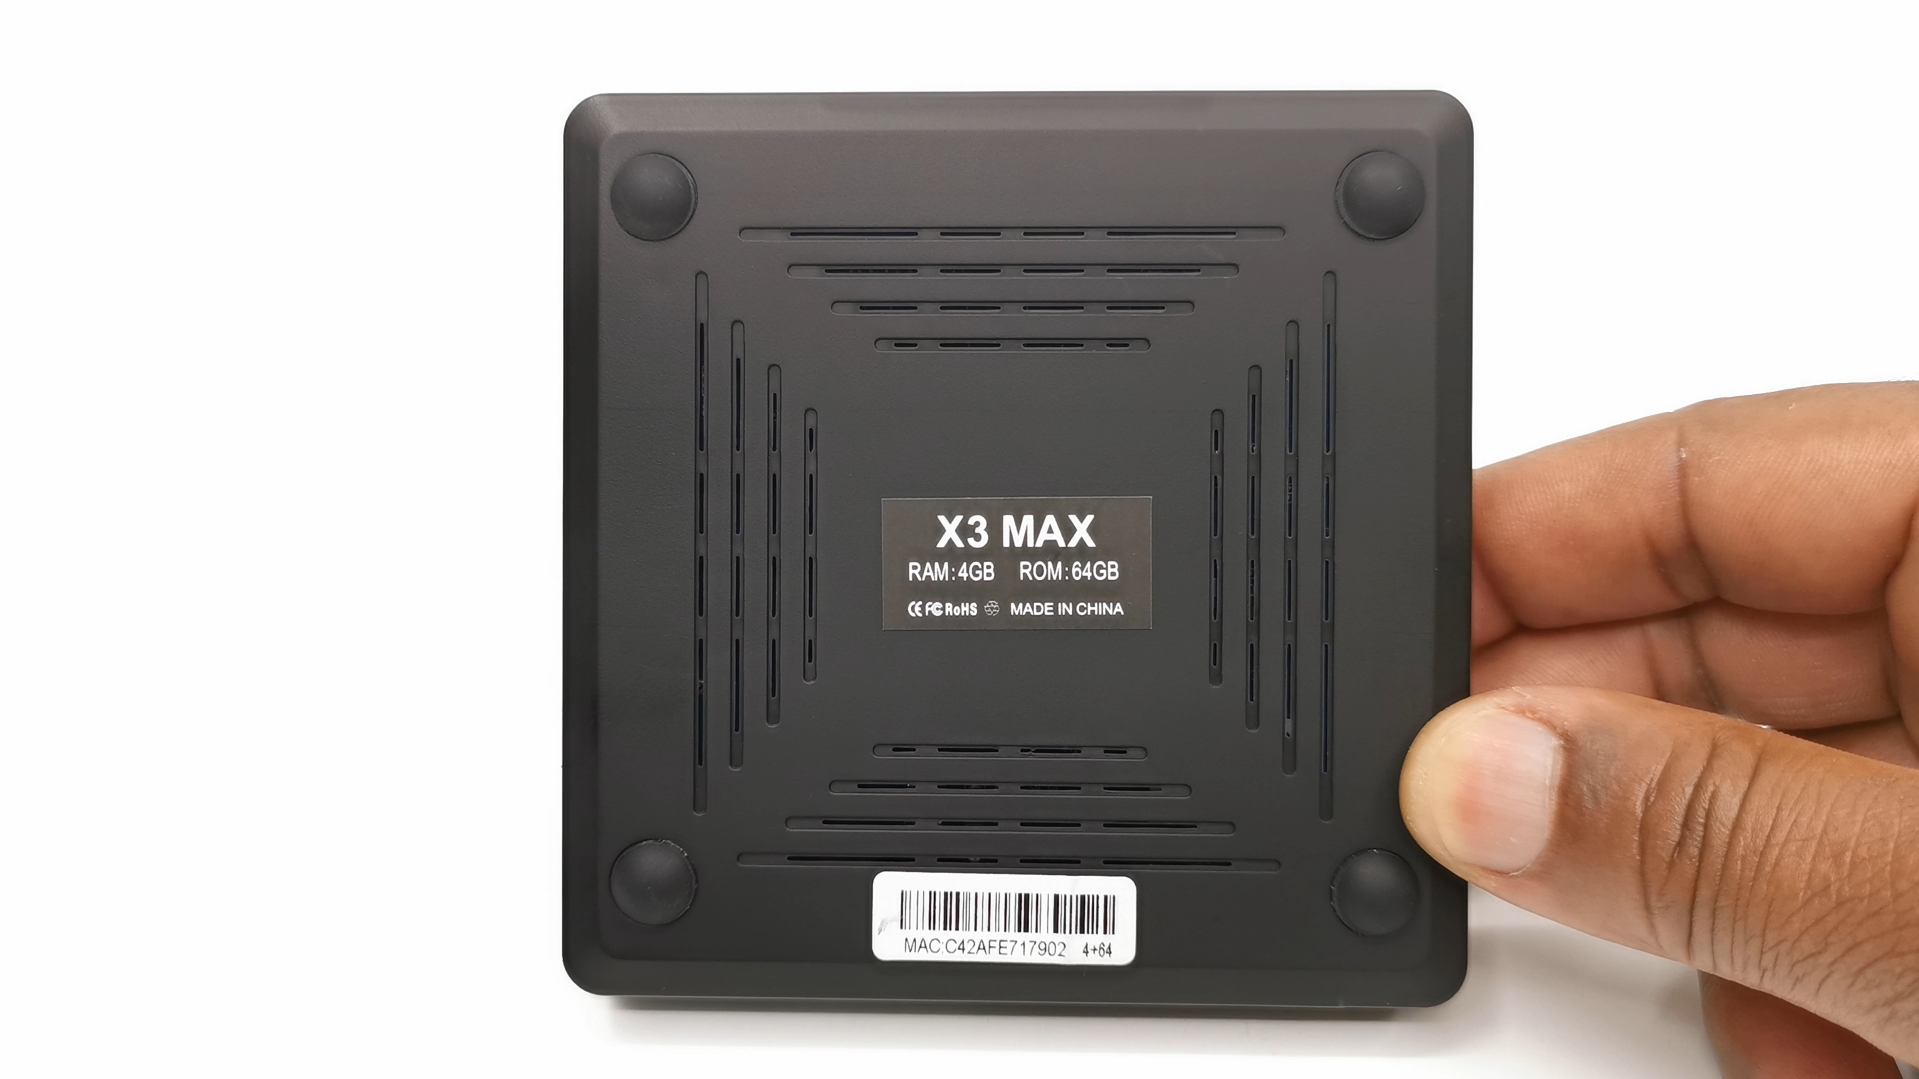 X3 Max TV box base view